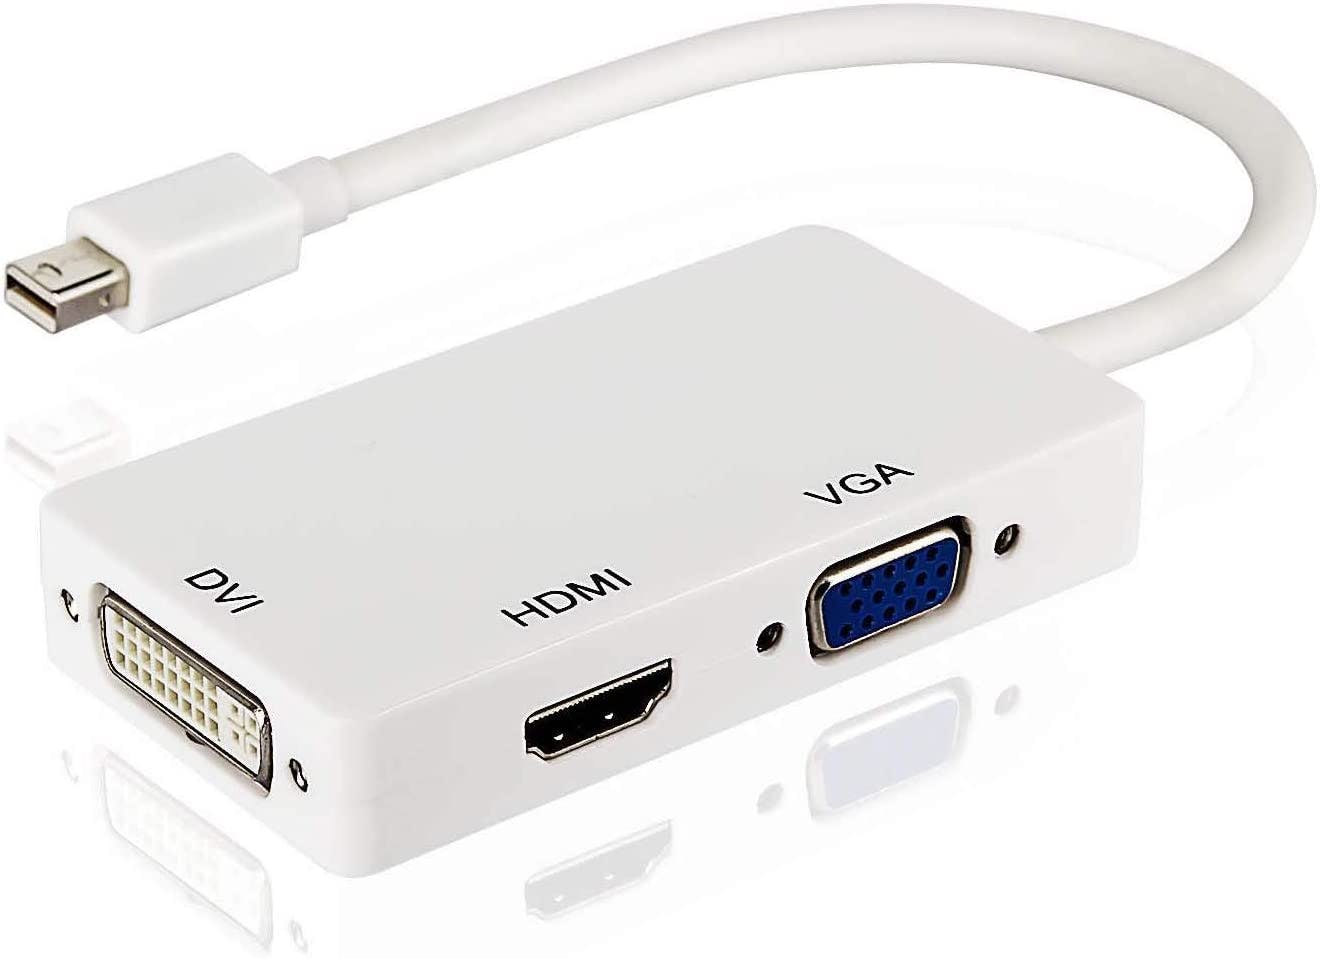 Adapter DVI VGA HDMI to Thunderbolt Adapter for MacBook